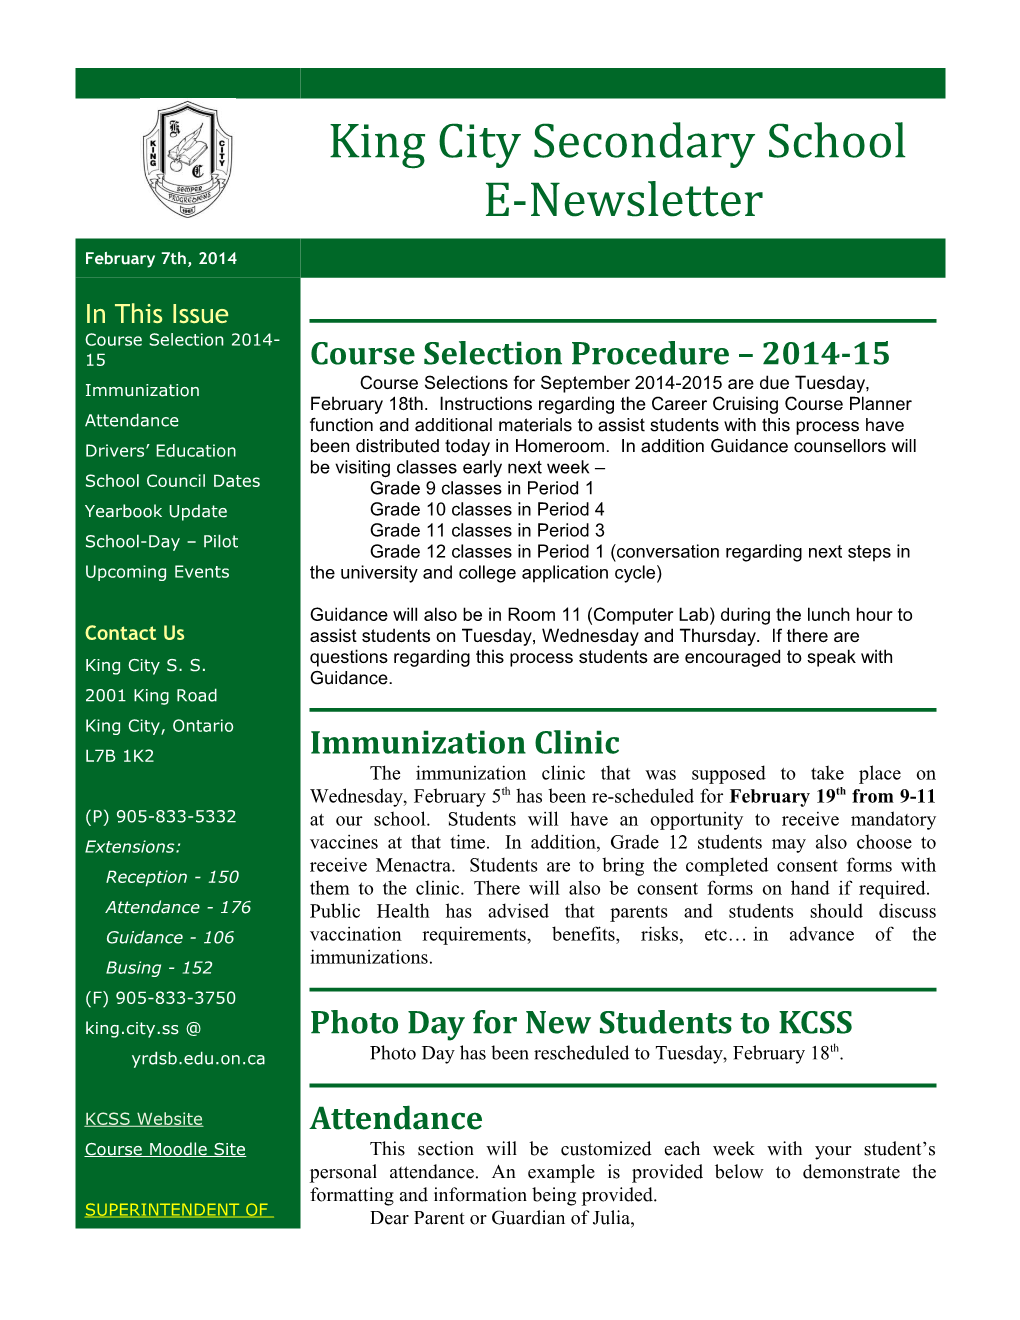 Course Selection Procedure 2014-15